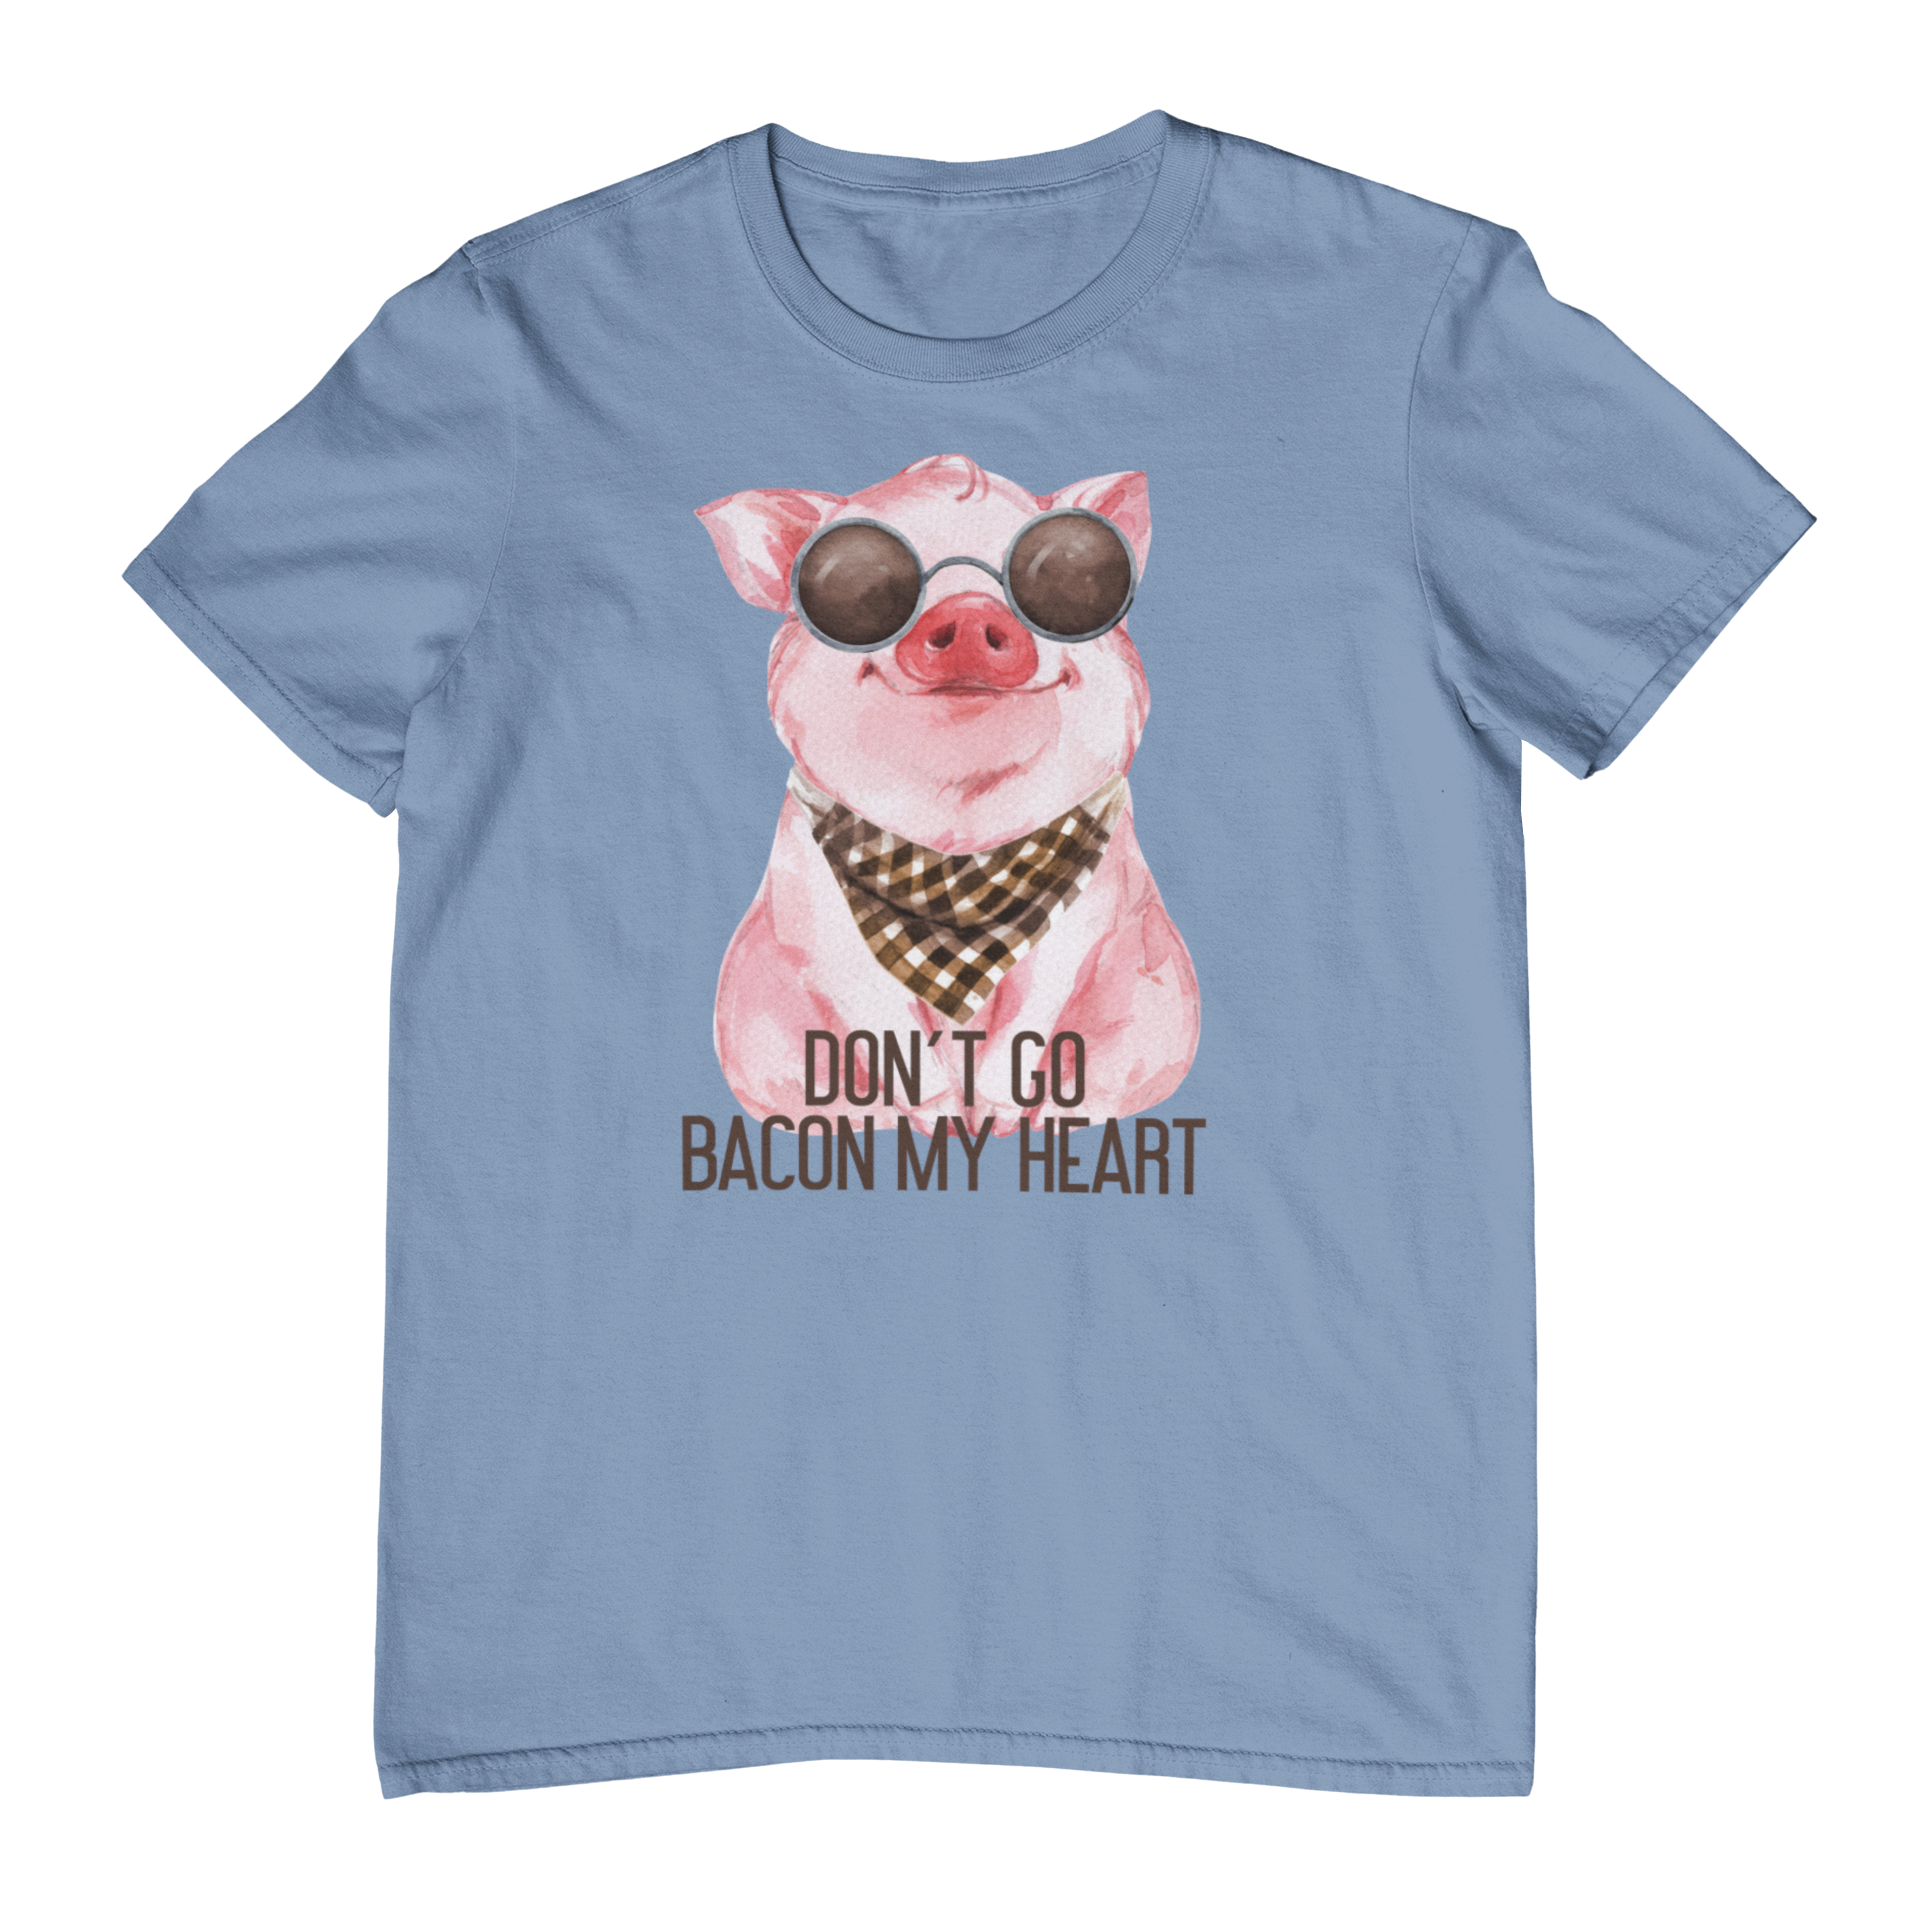 BACON - Don't Go Bacon My Heart - Shirt